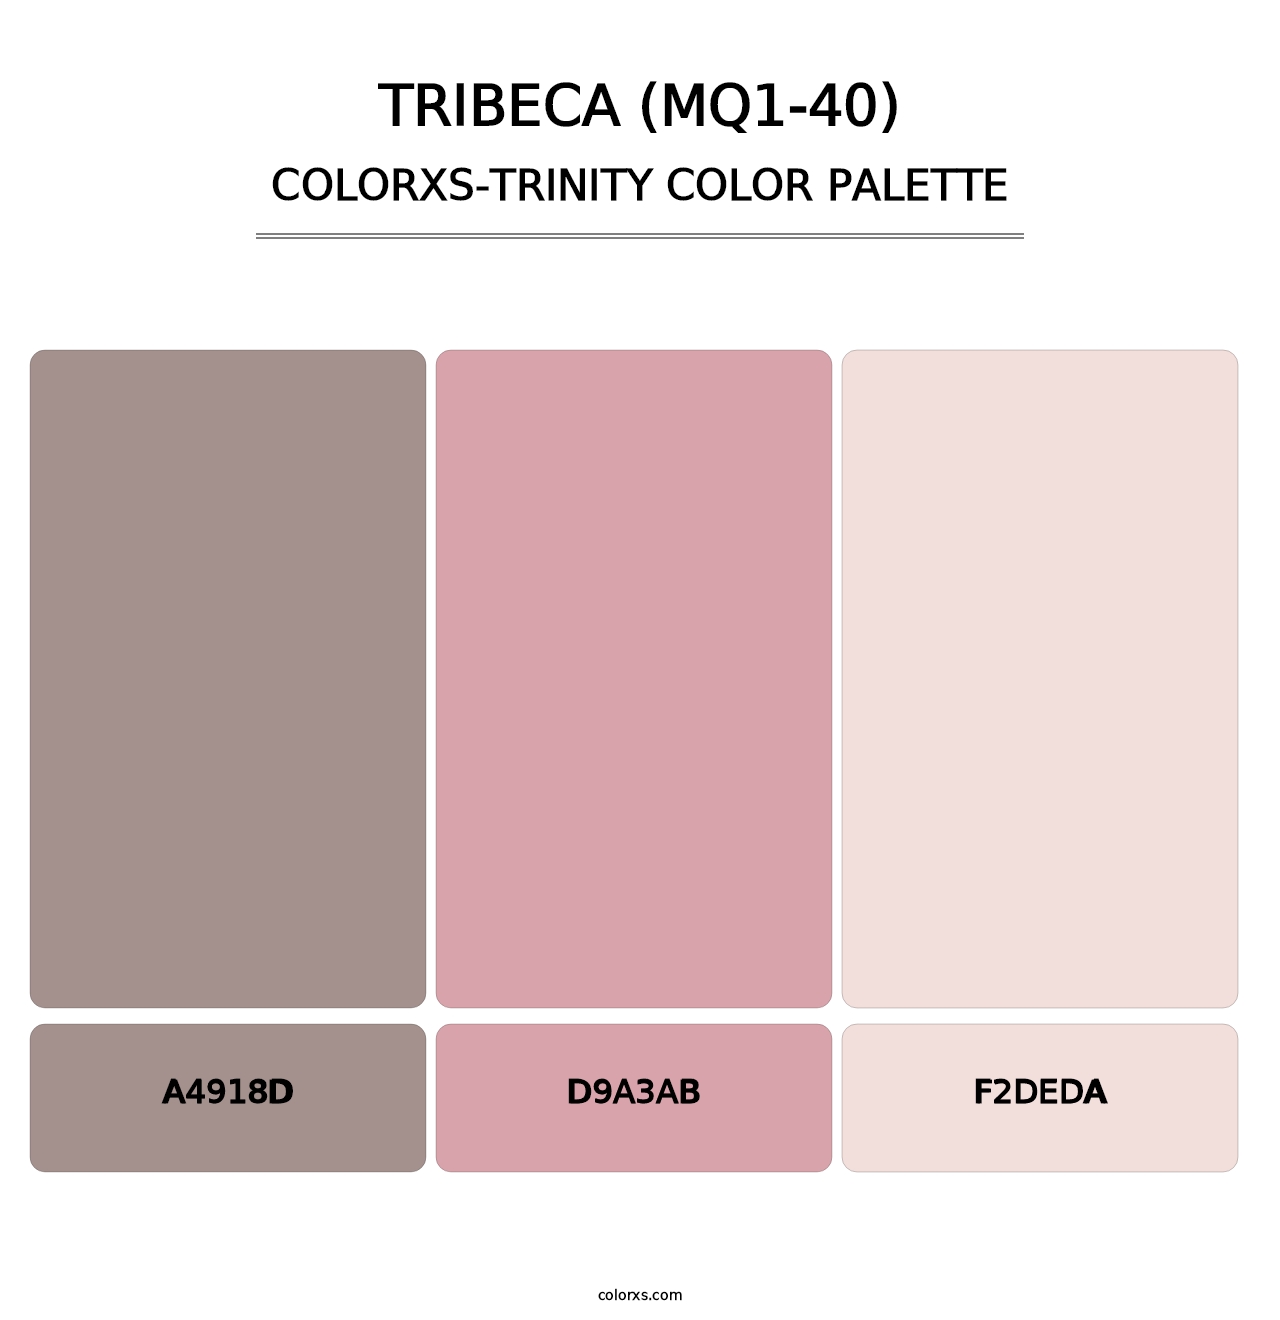 Tribeca (MQ1-40) - Colorxs Trinity Palette